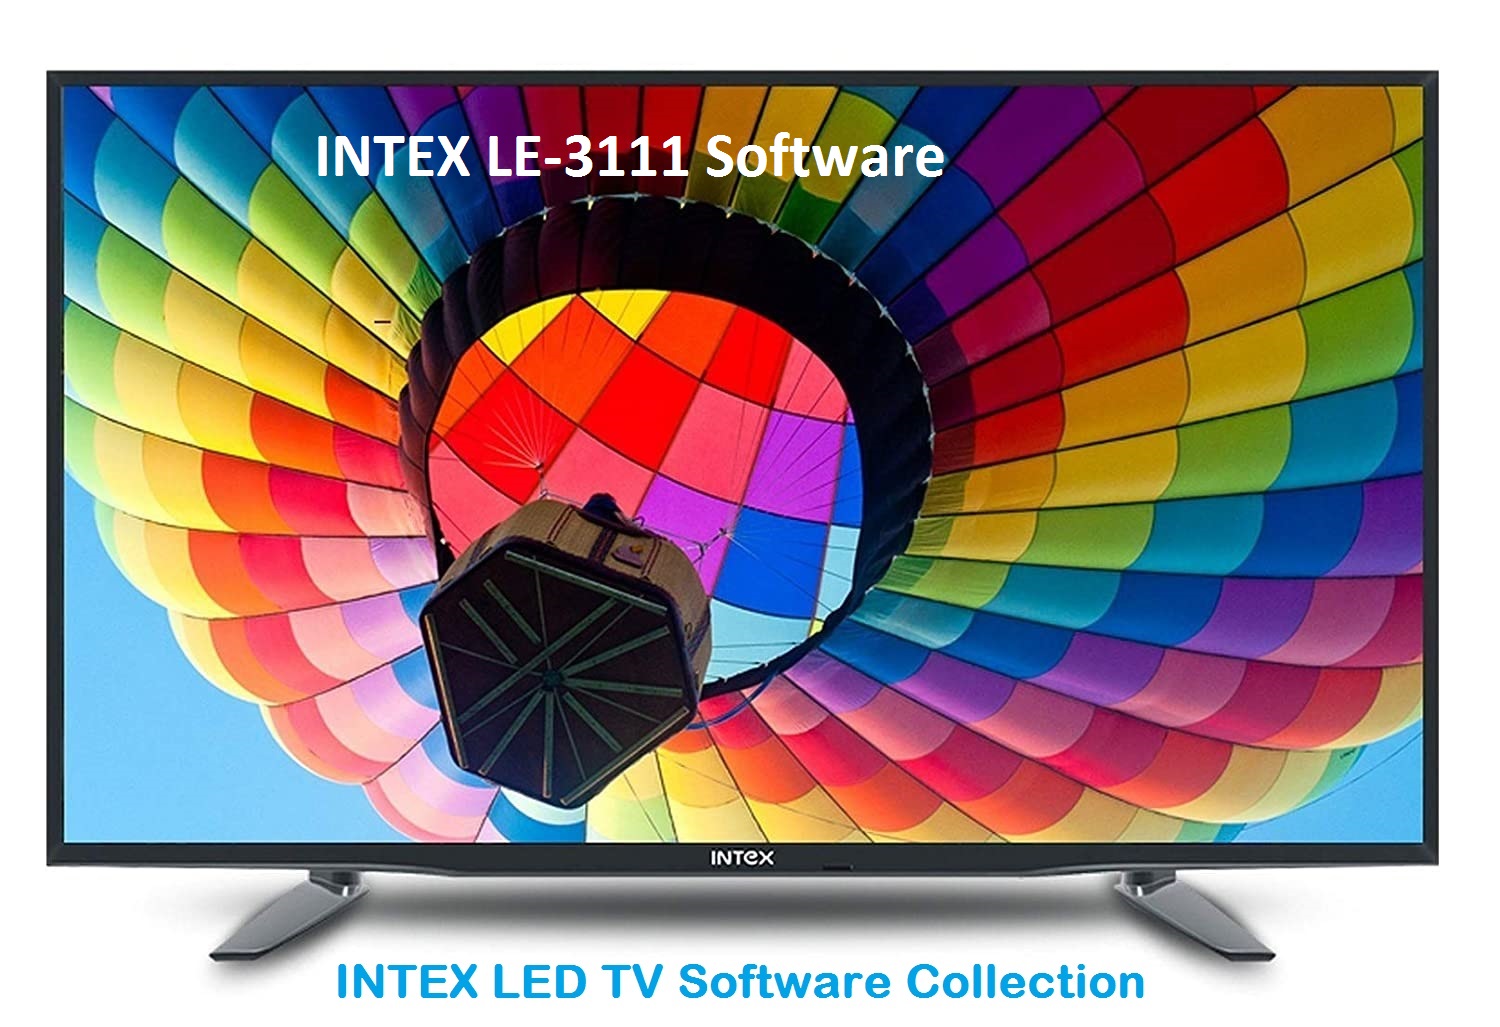 Intex Le-3111